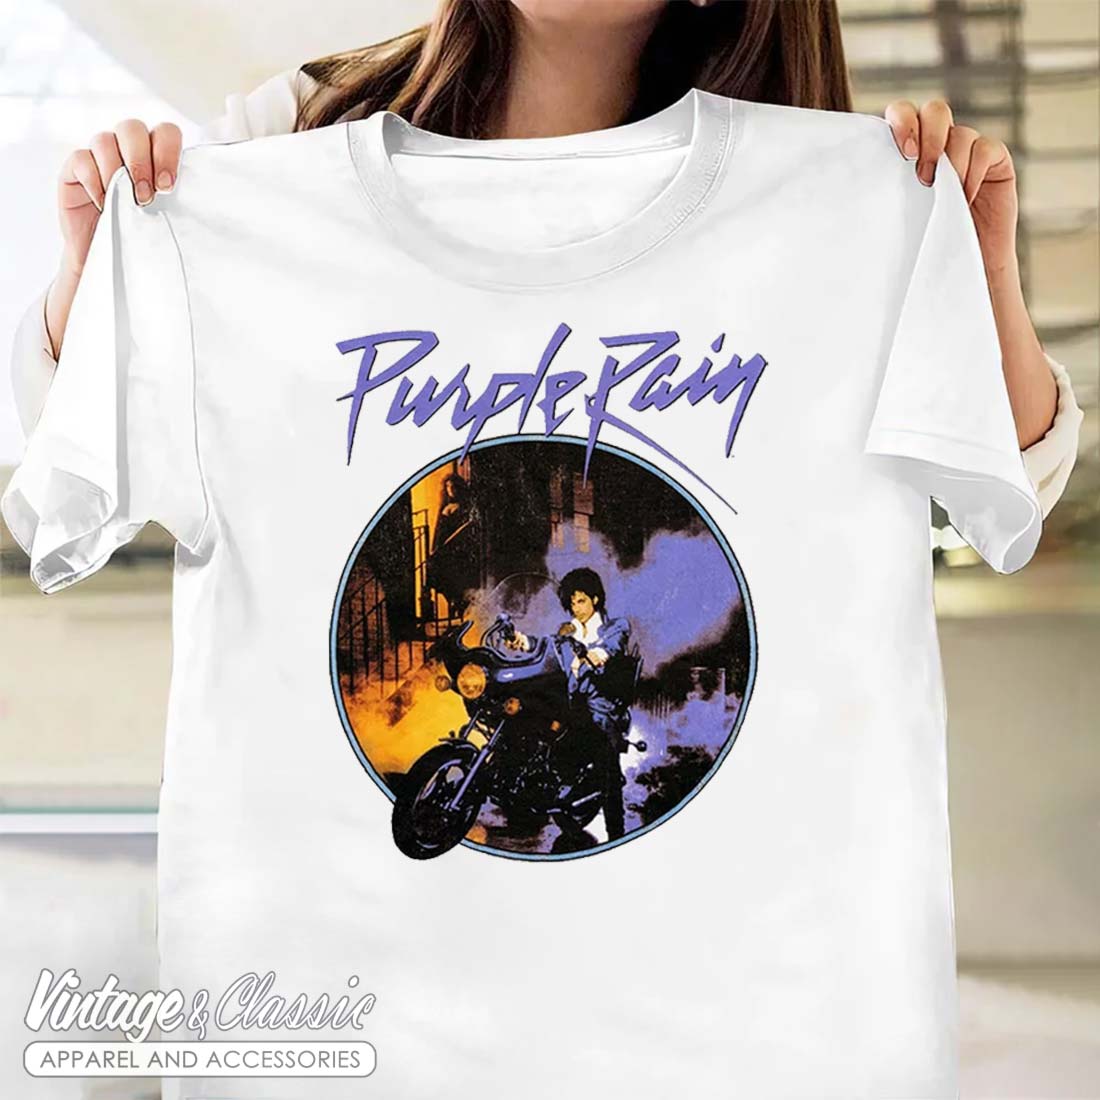 Album T Tee Music Purple Legend Vintagenclassic Cover Singer - Shirt Rain Prince